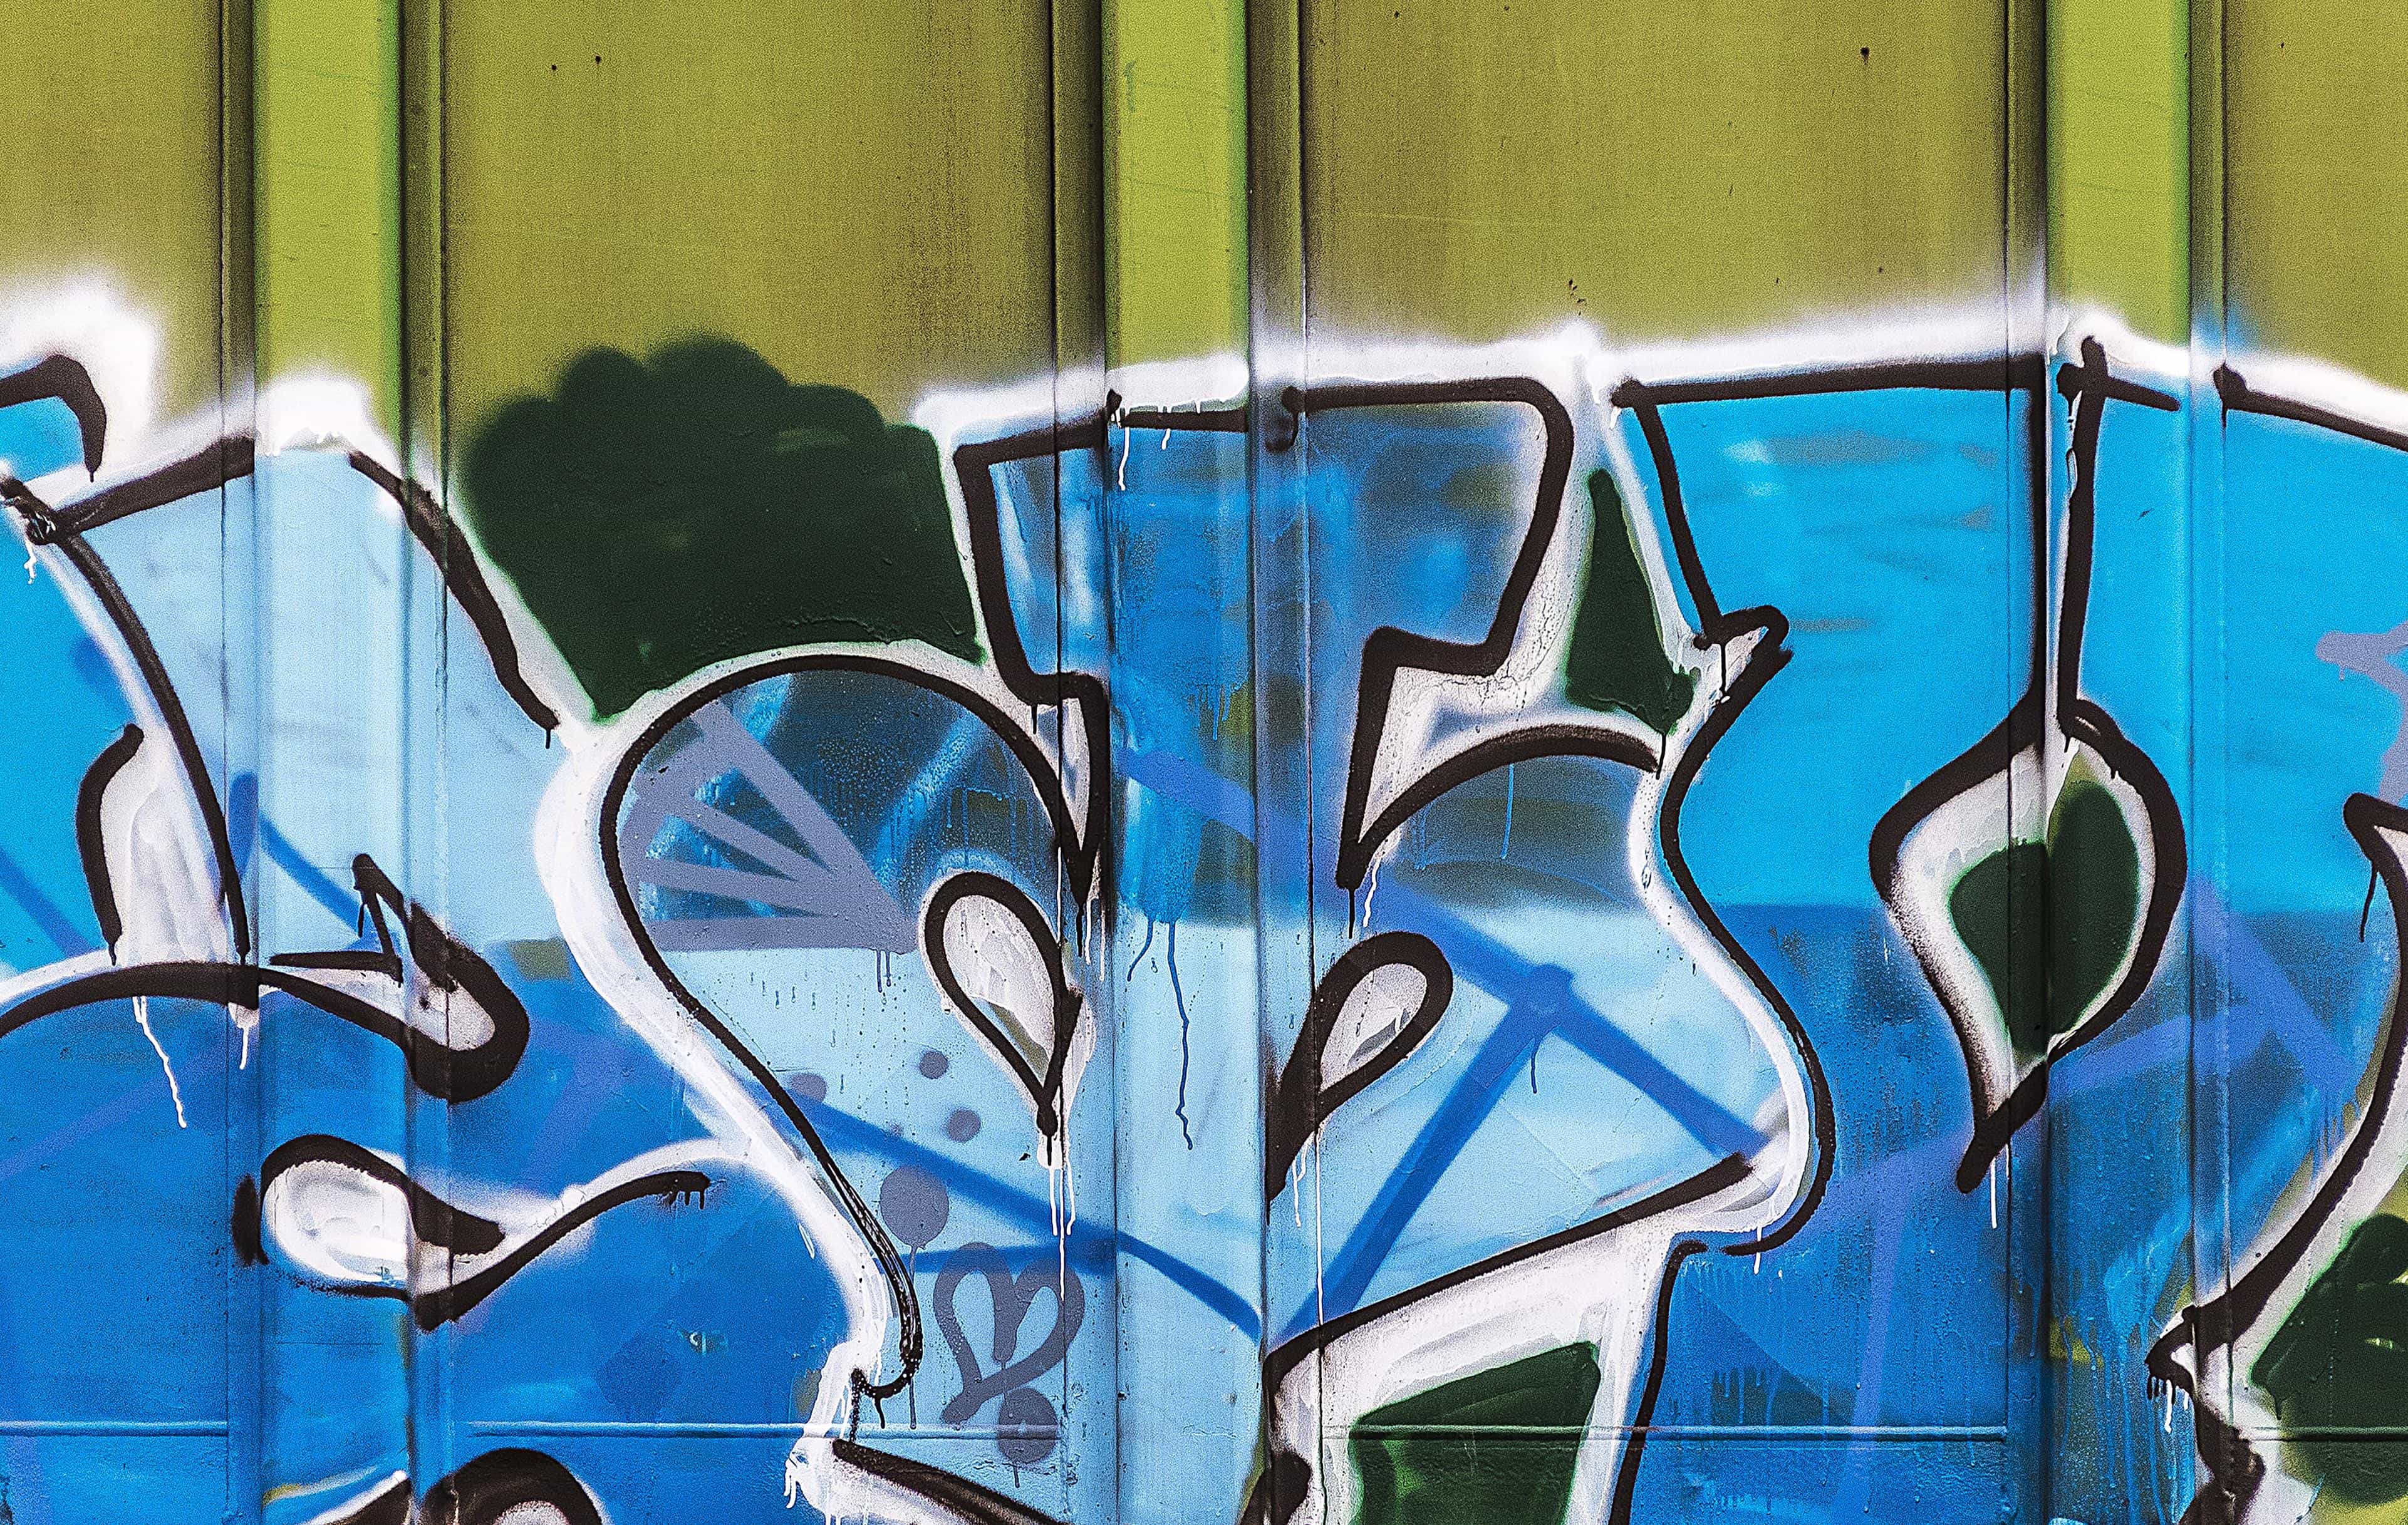 Free picture: graffiti, wall, vandalism, text, street, urban, abstract